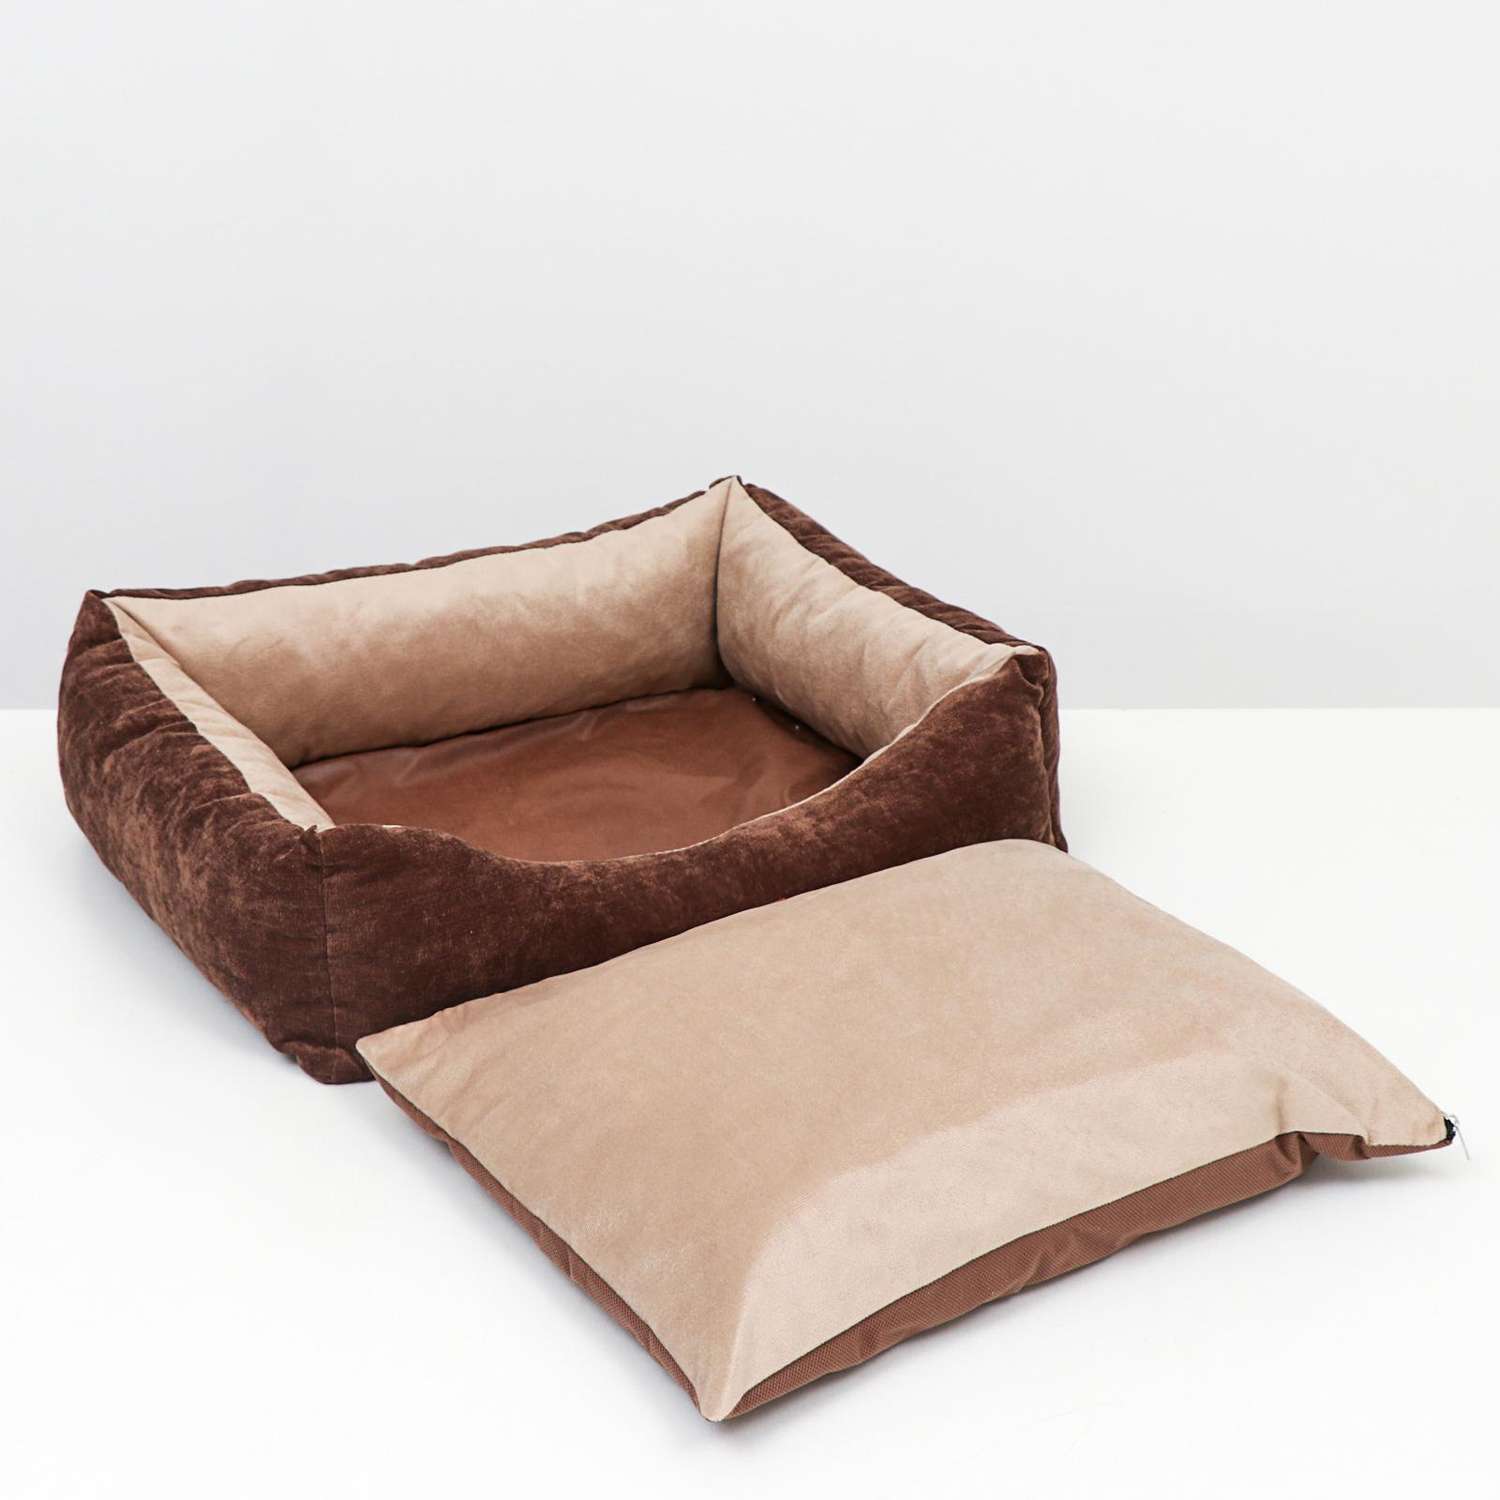 Лежанка Пижон со съемным чехлом мебельная ткань поролон 55х45х15 см - фото 6